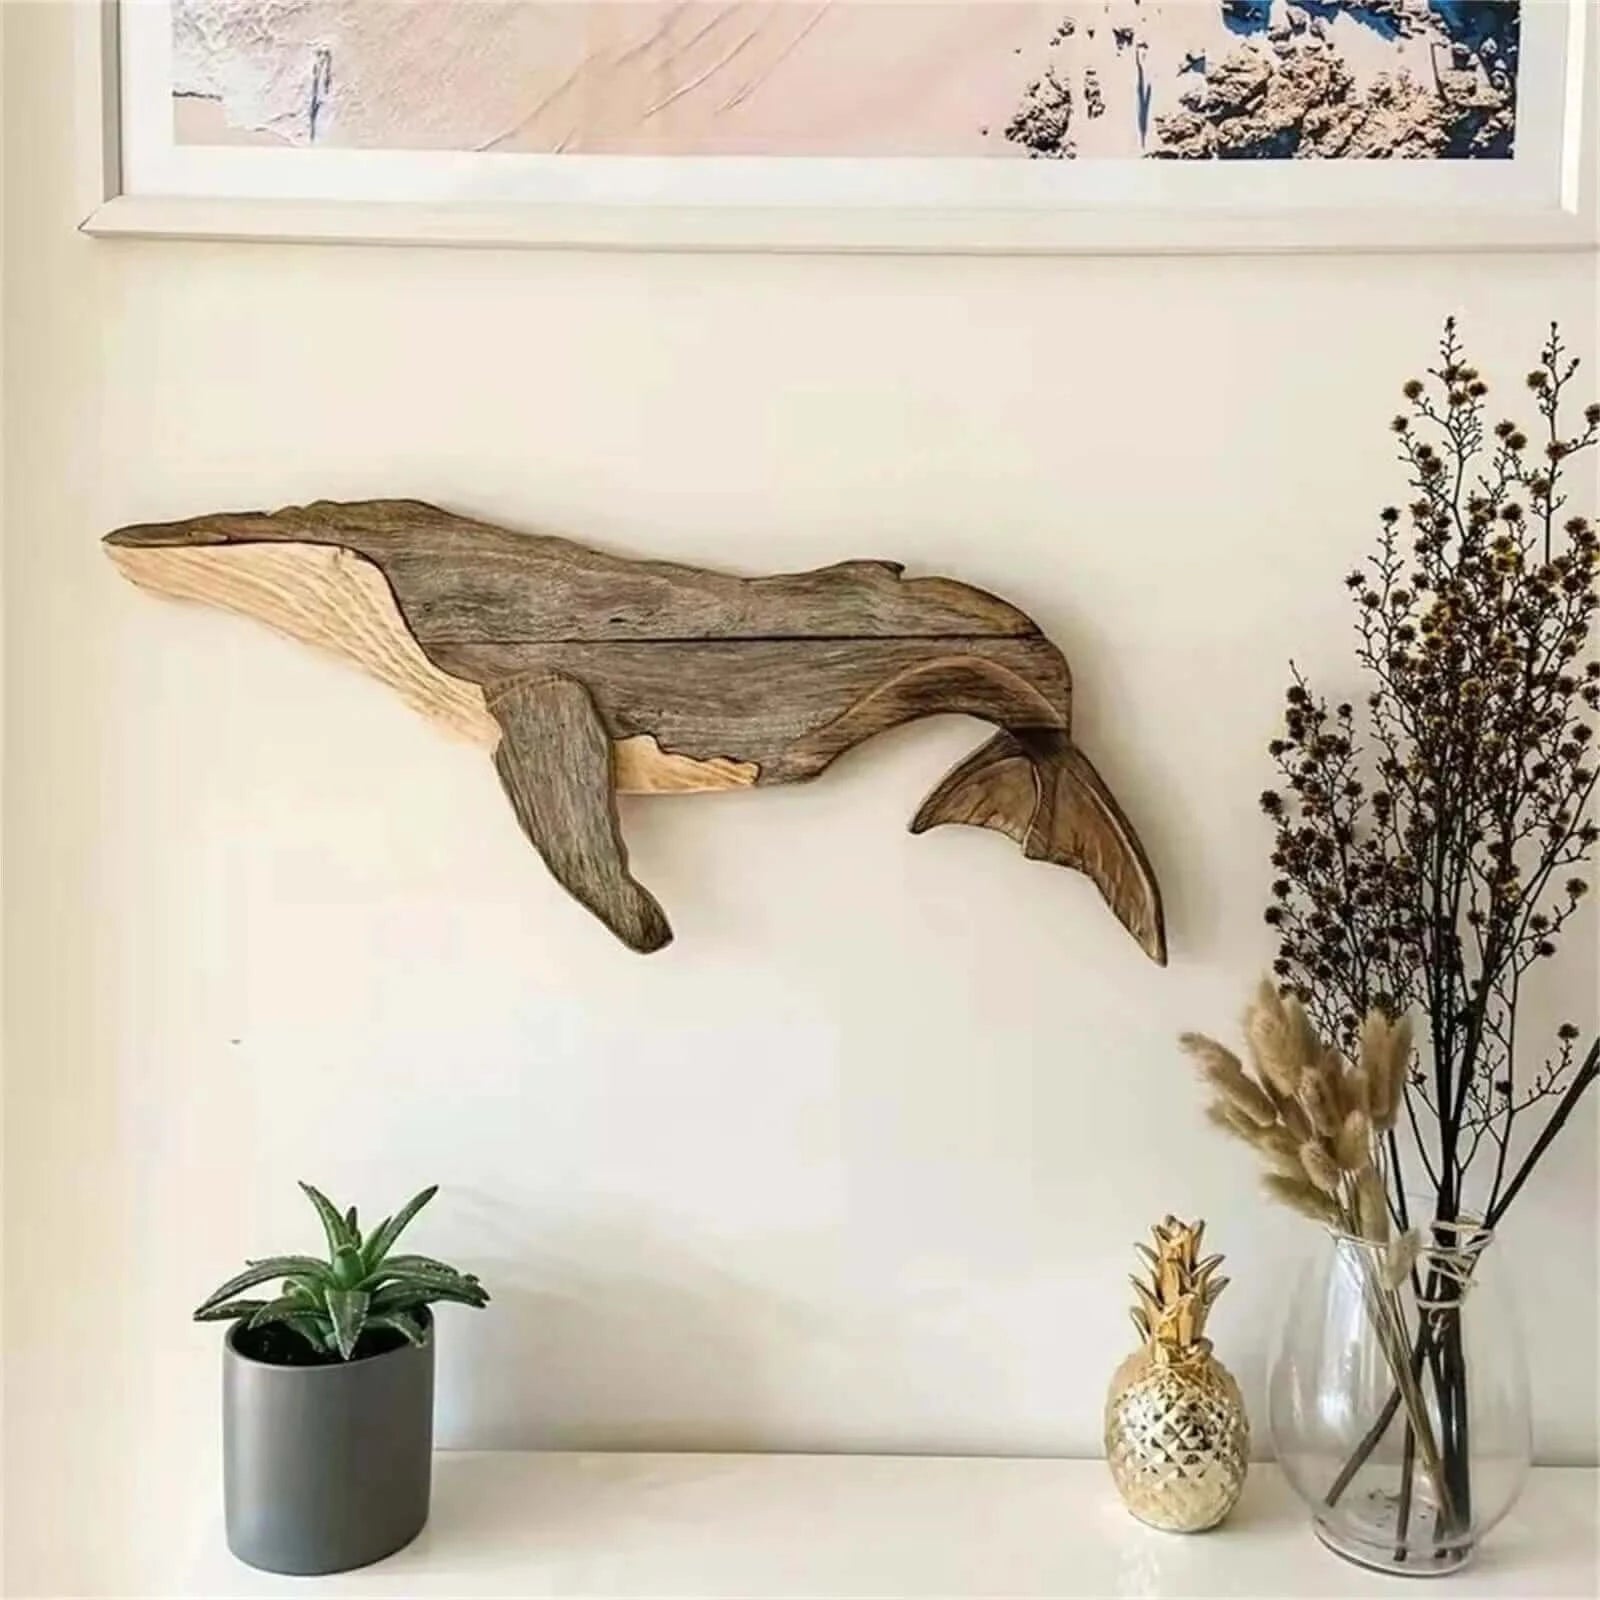 Wooden Fish Wall Hanging